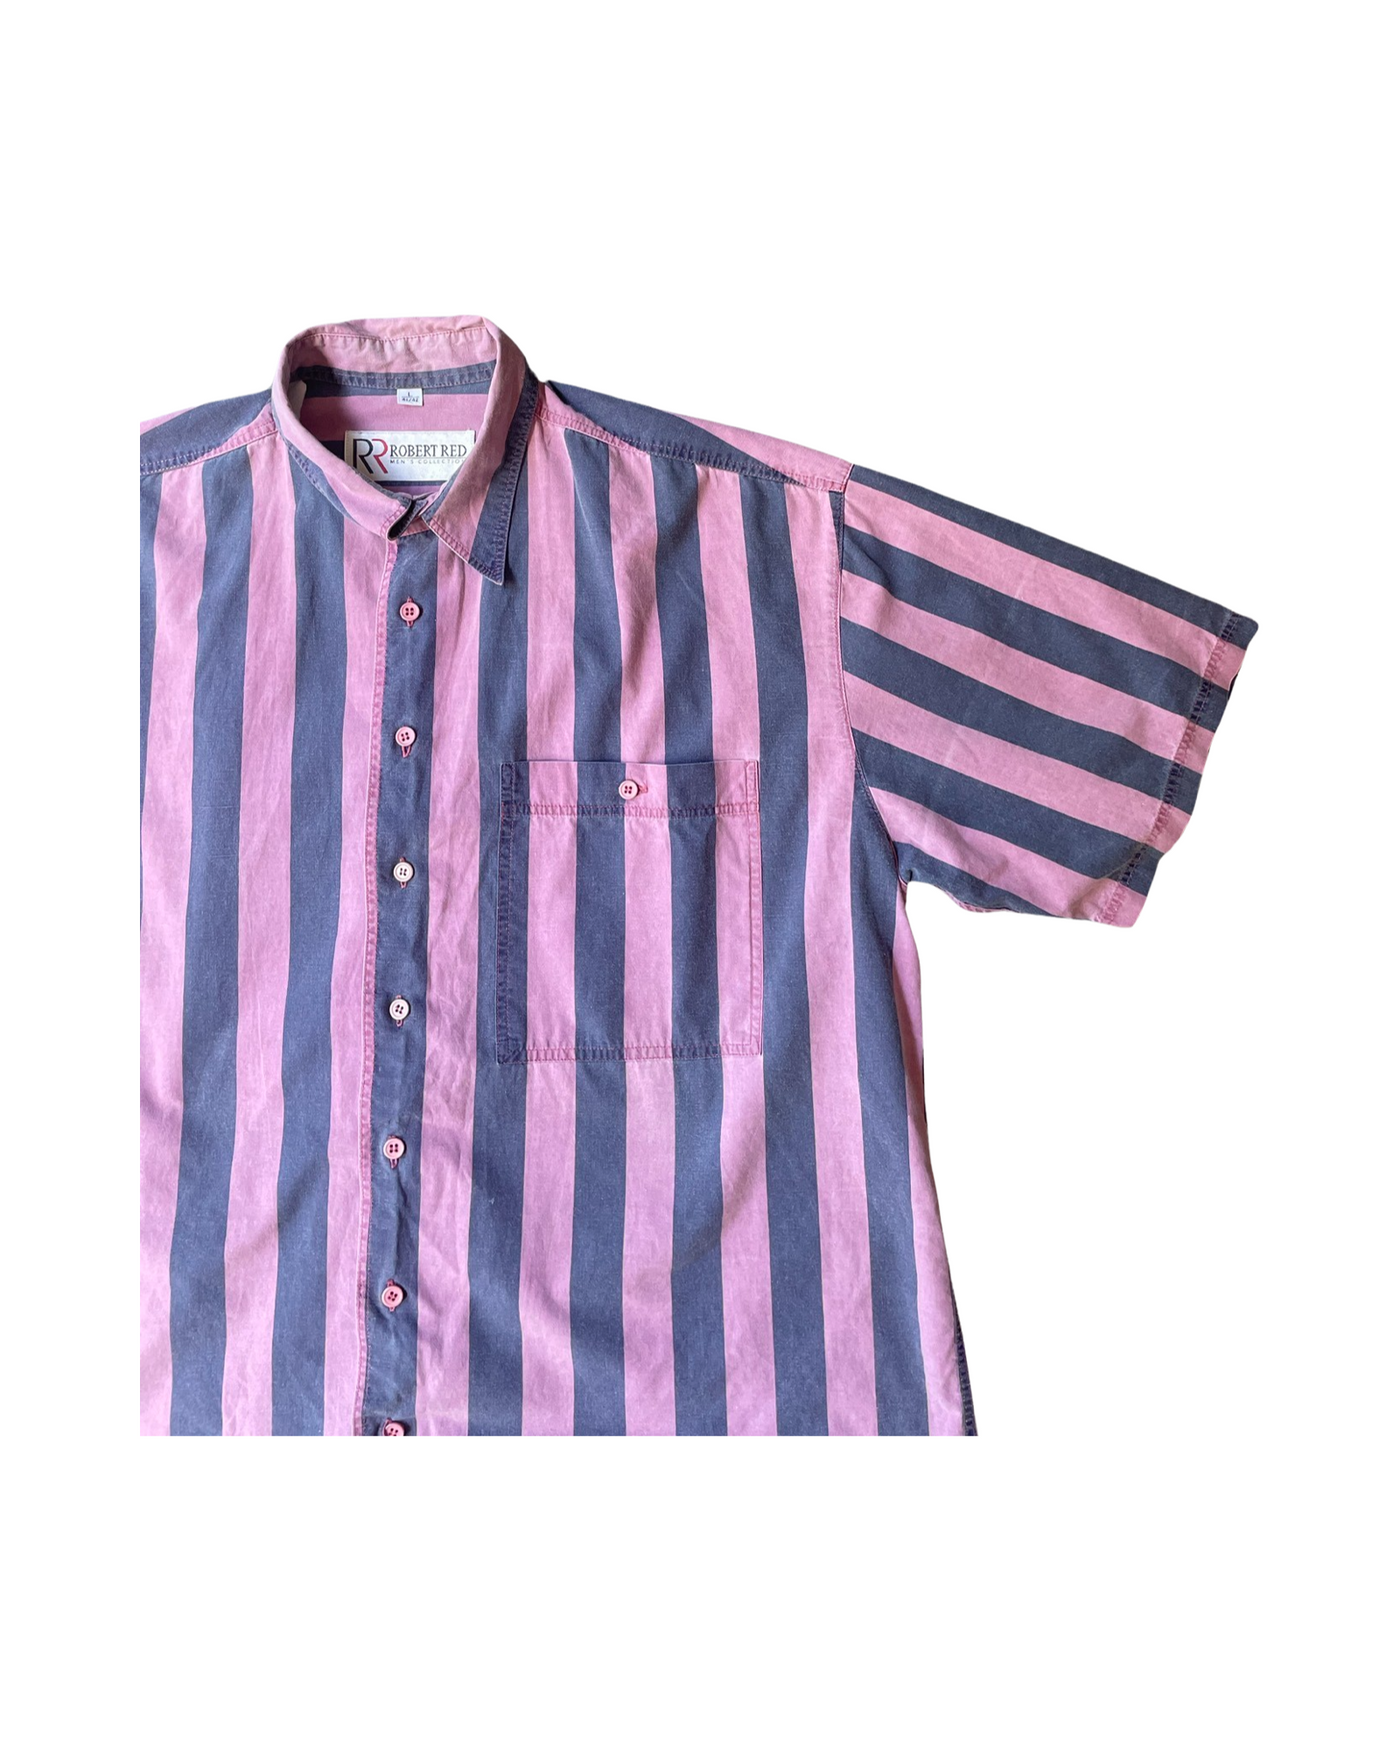 Vintage 90’s Stripe Shirt